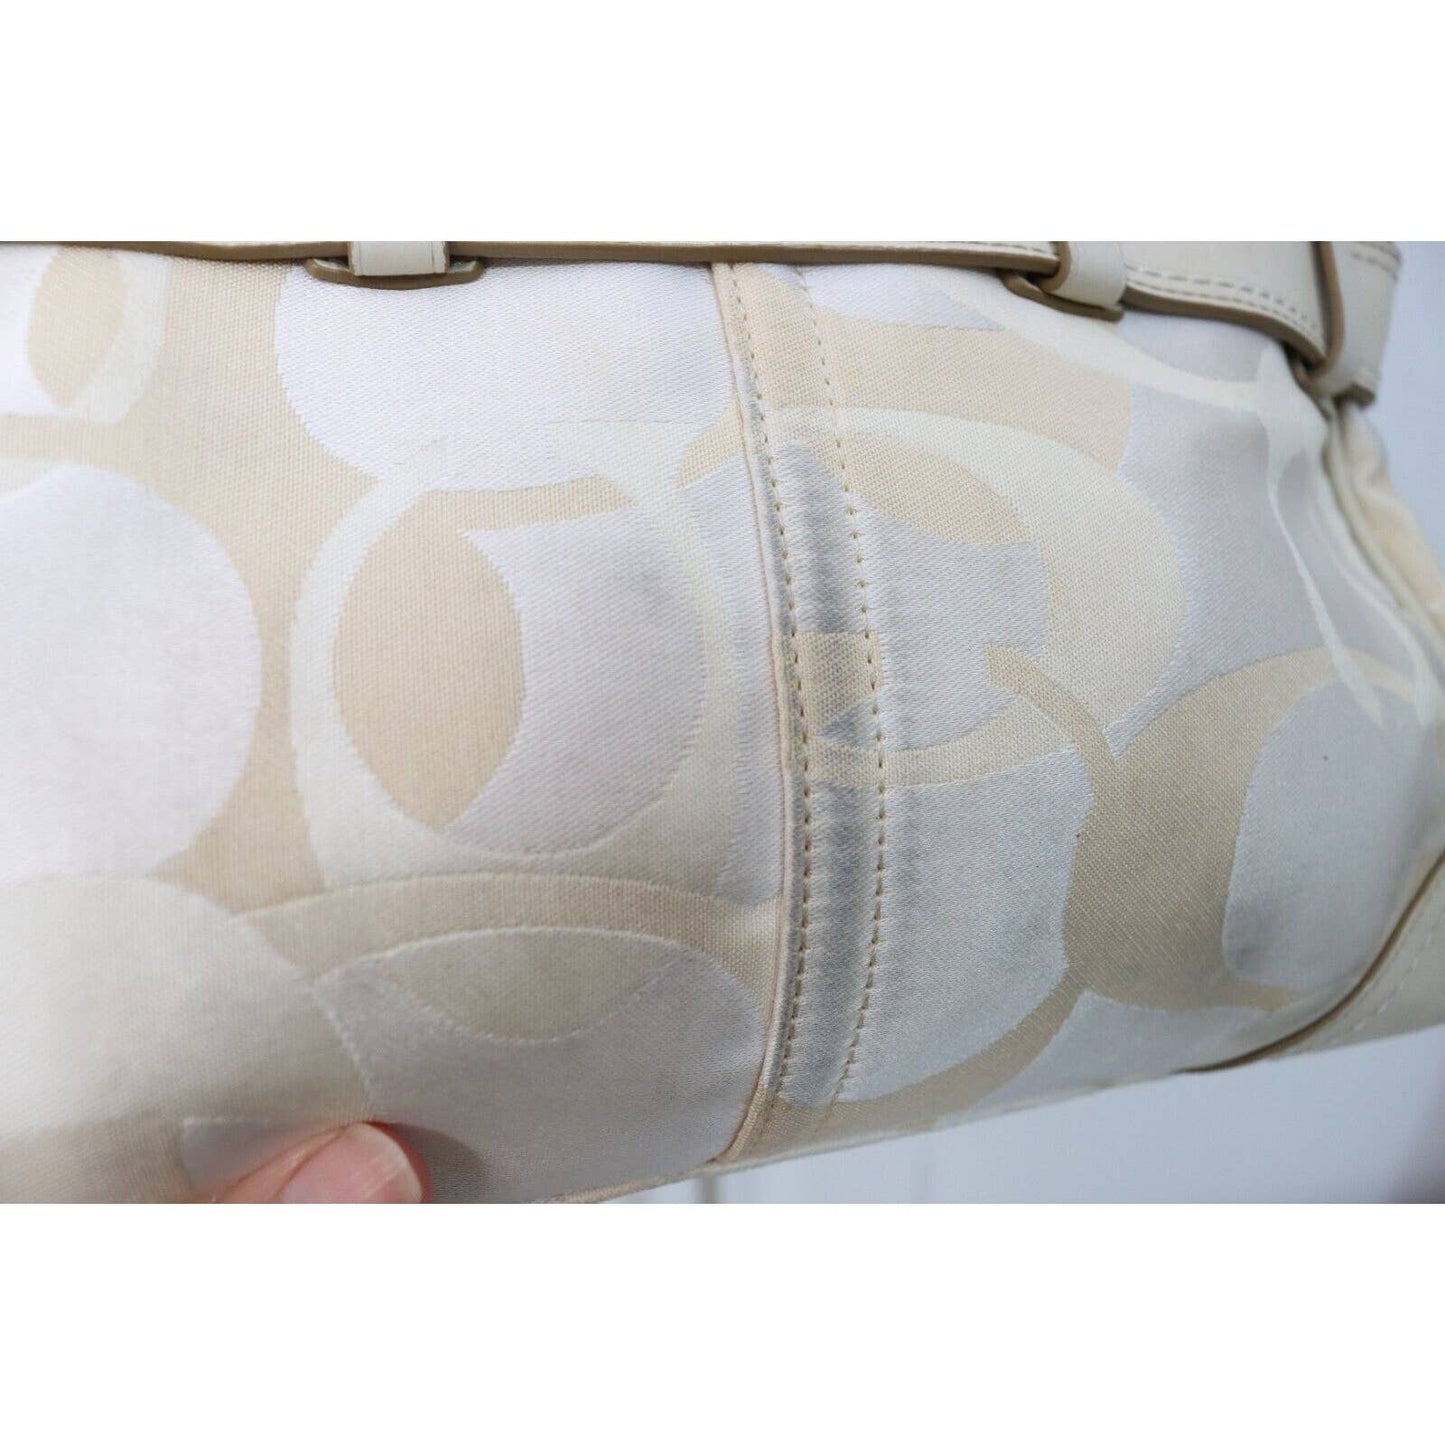 Coach Hampton Cream/White/Tan Signature Canvas and Leather Satchel Handbag 13338